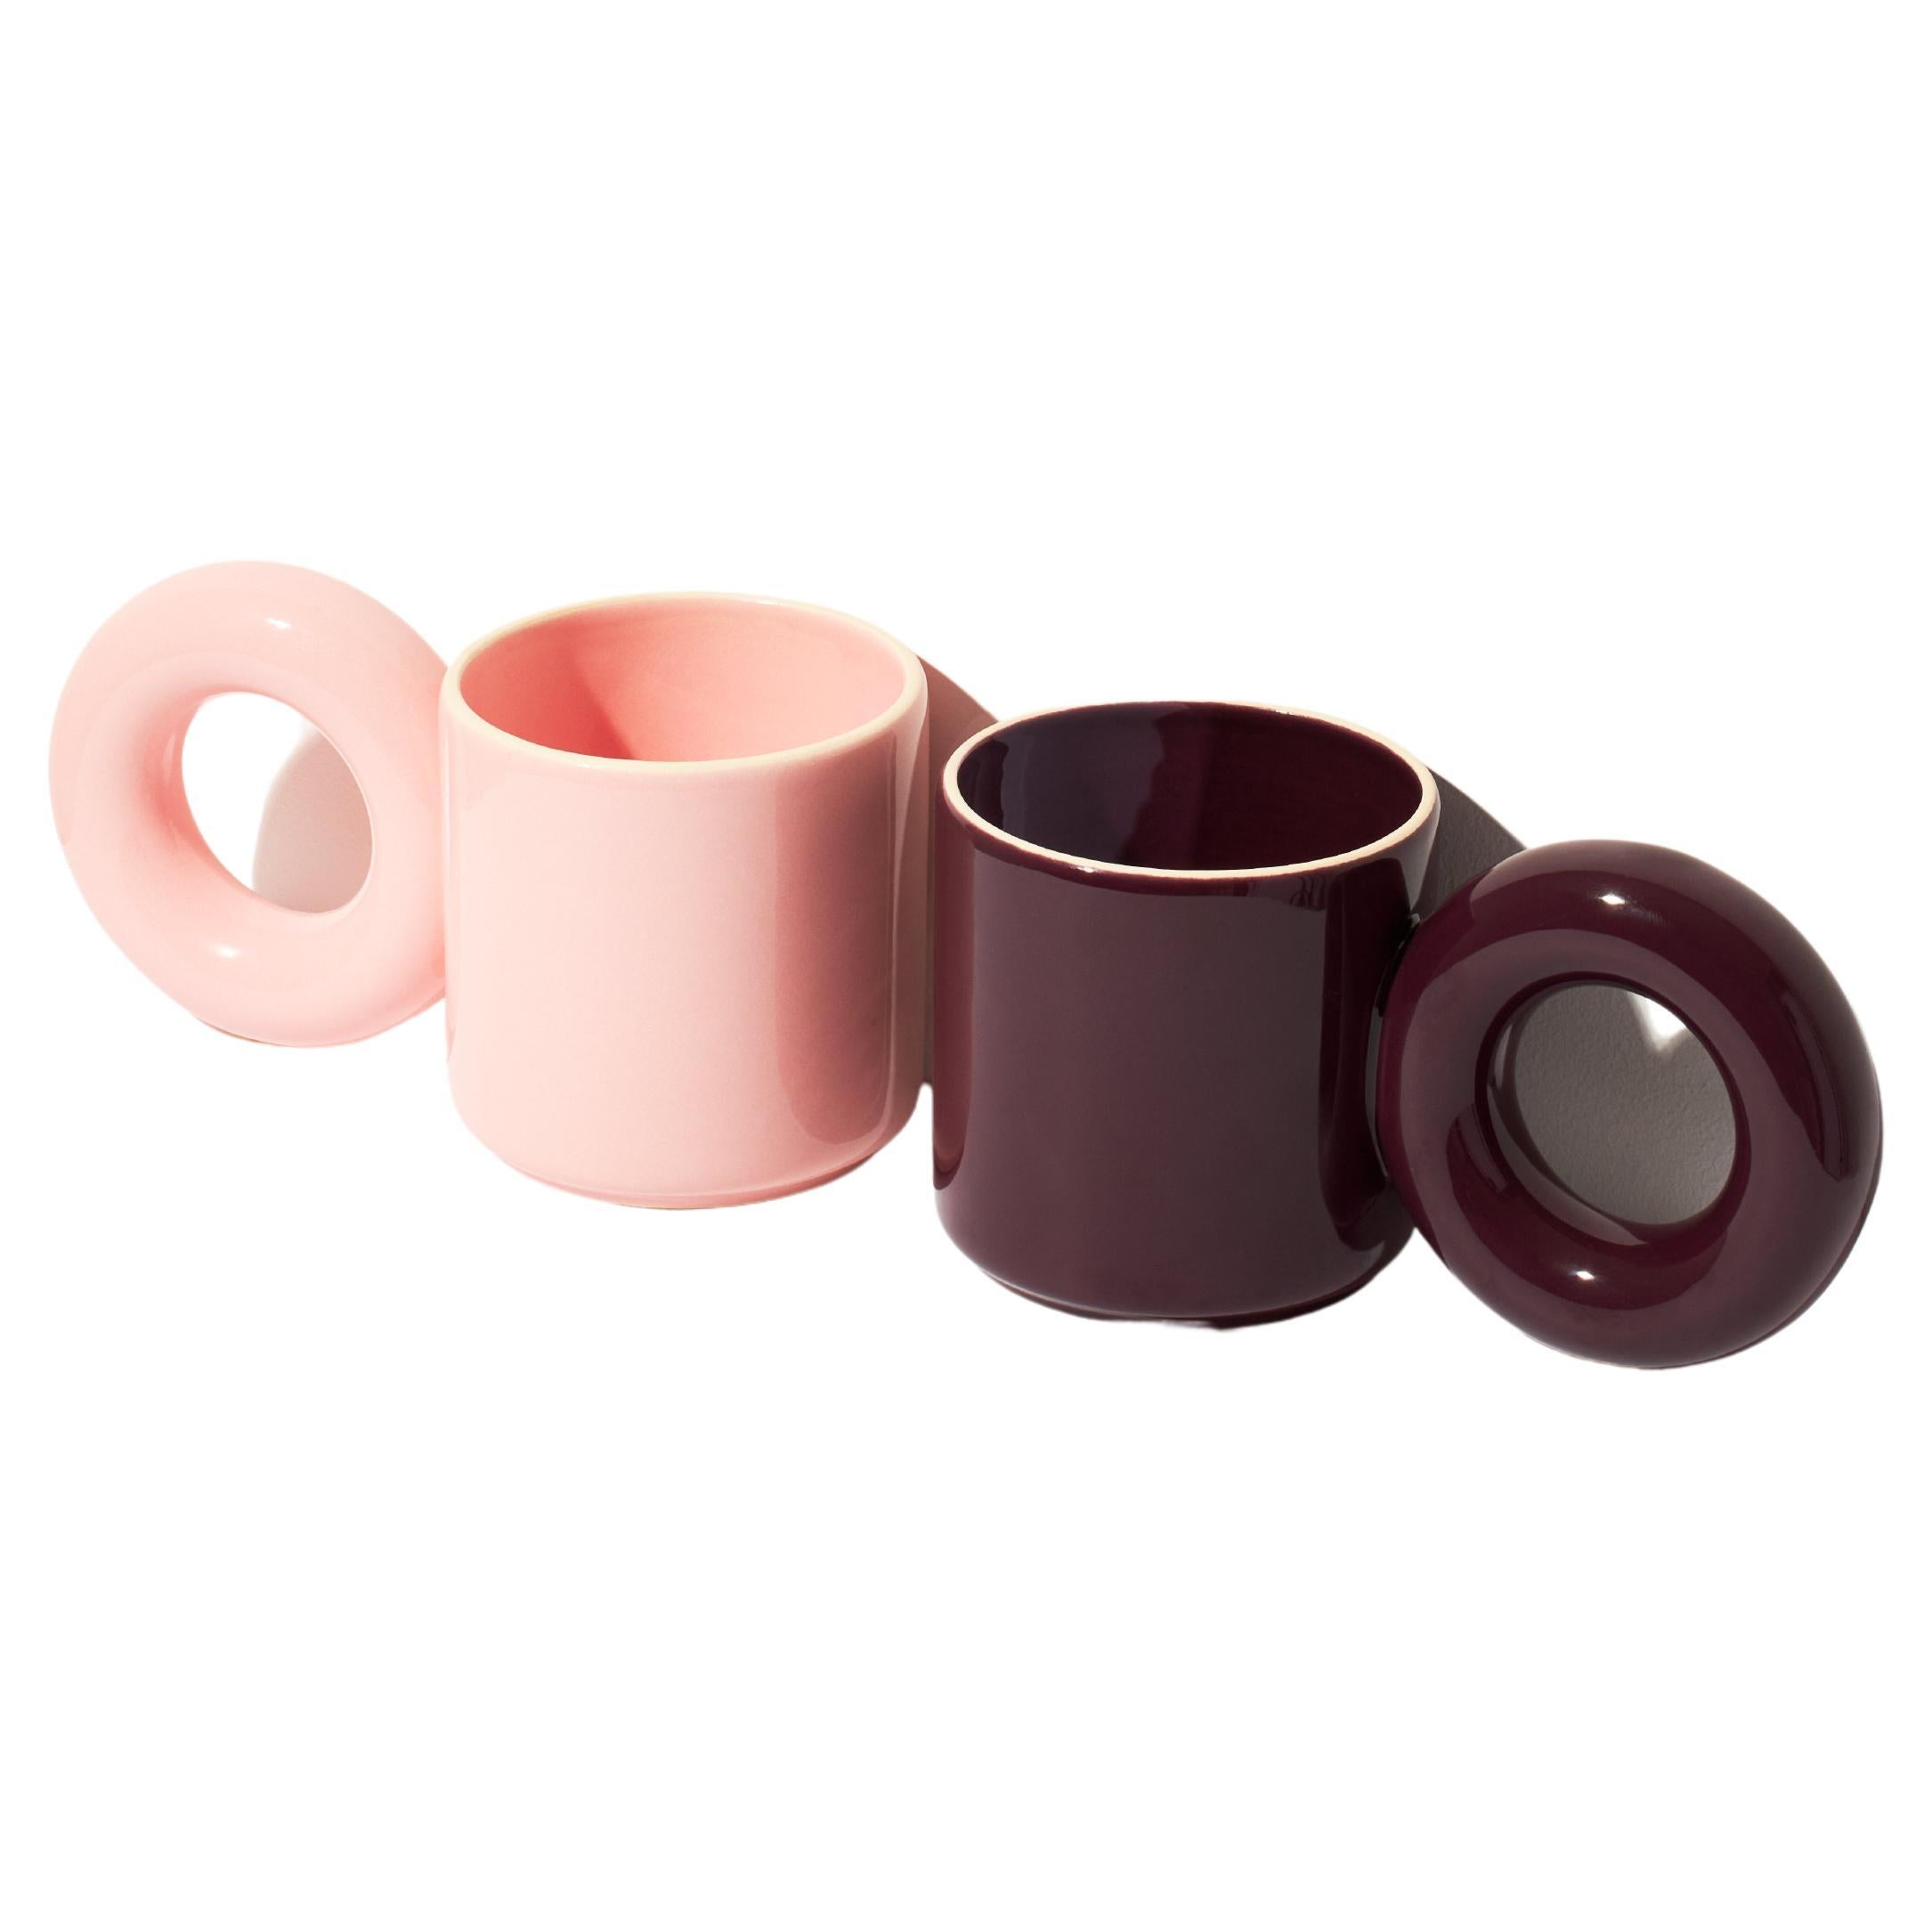 UCHO Mug / Candy / Plum / set of 2 by Malwina Konopacka For Sale